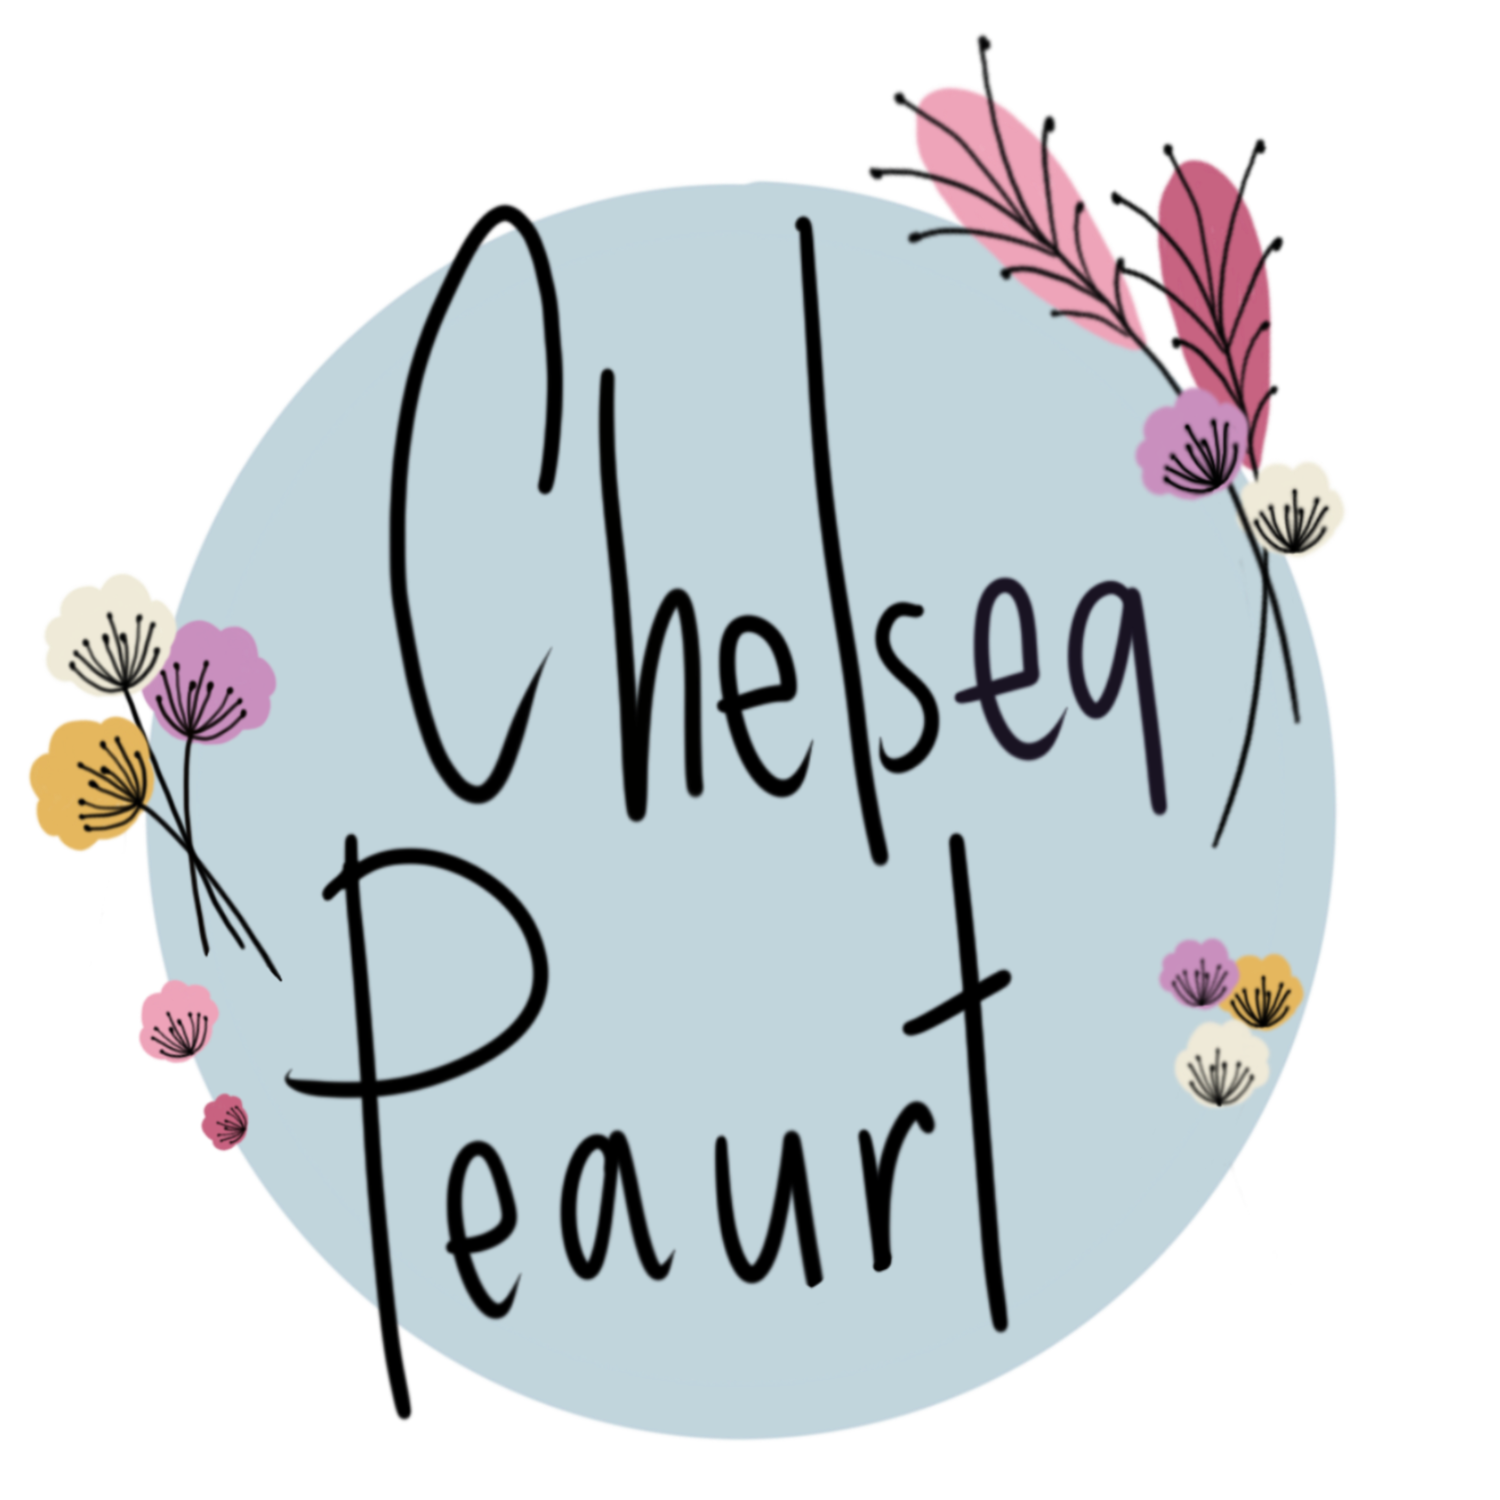 Chelsea Peaurt